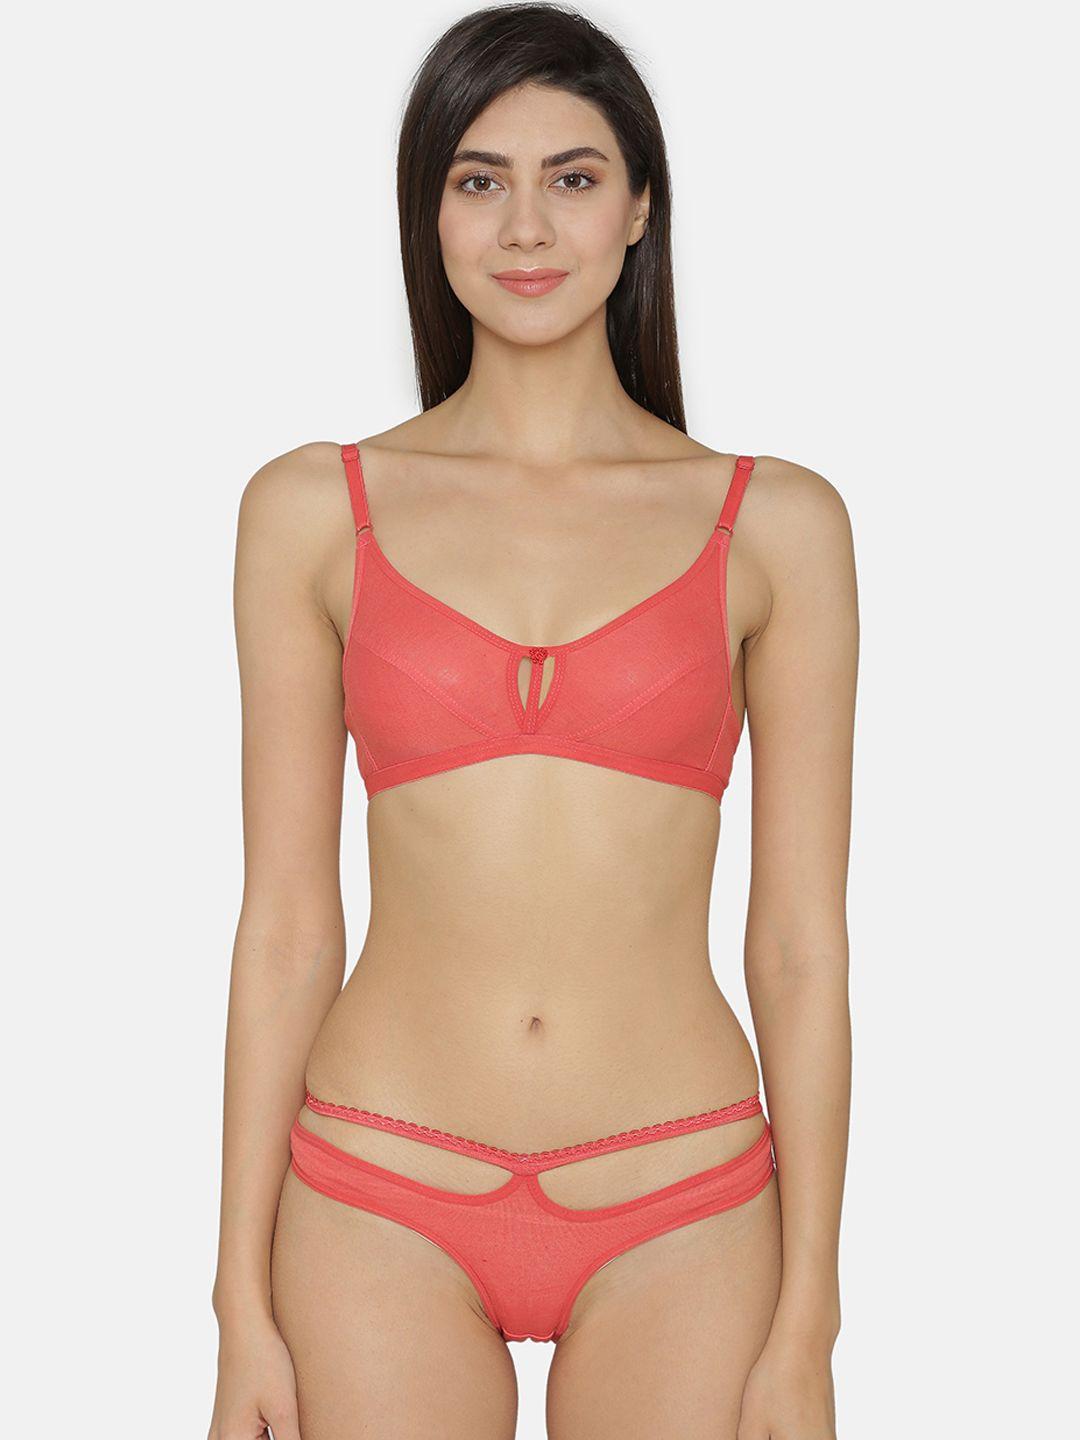 abelino women orange solid lingerie set set1400orange01